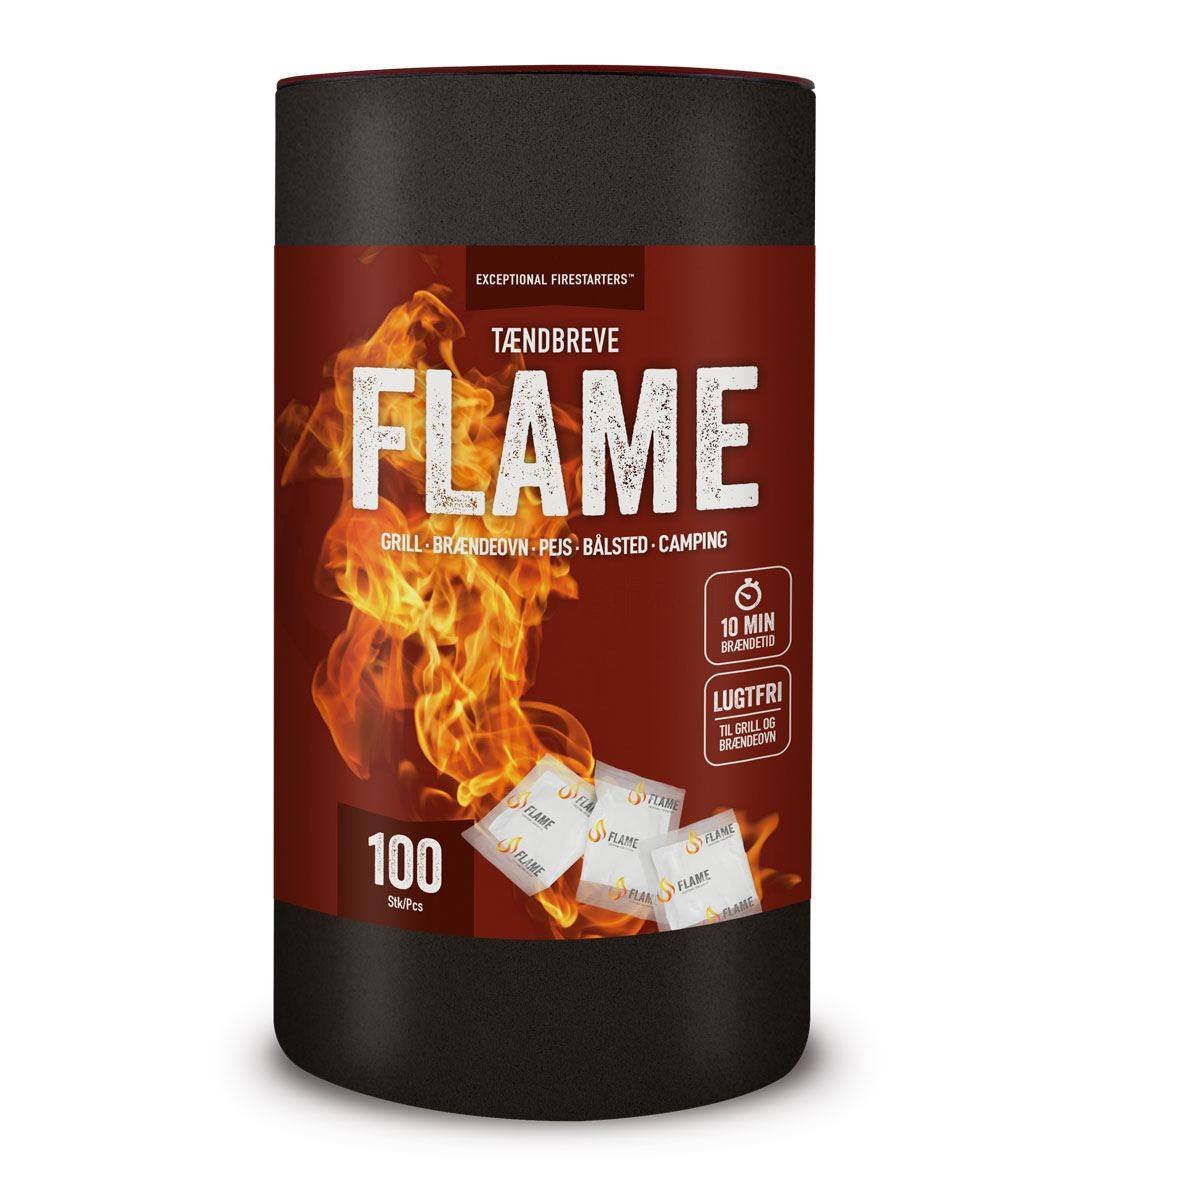 Flame tændbreve - 100 stk i paprør